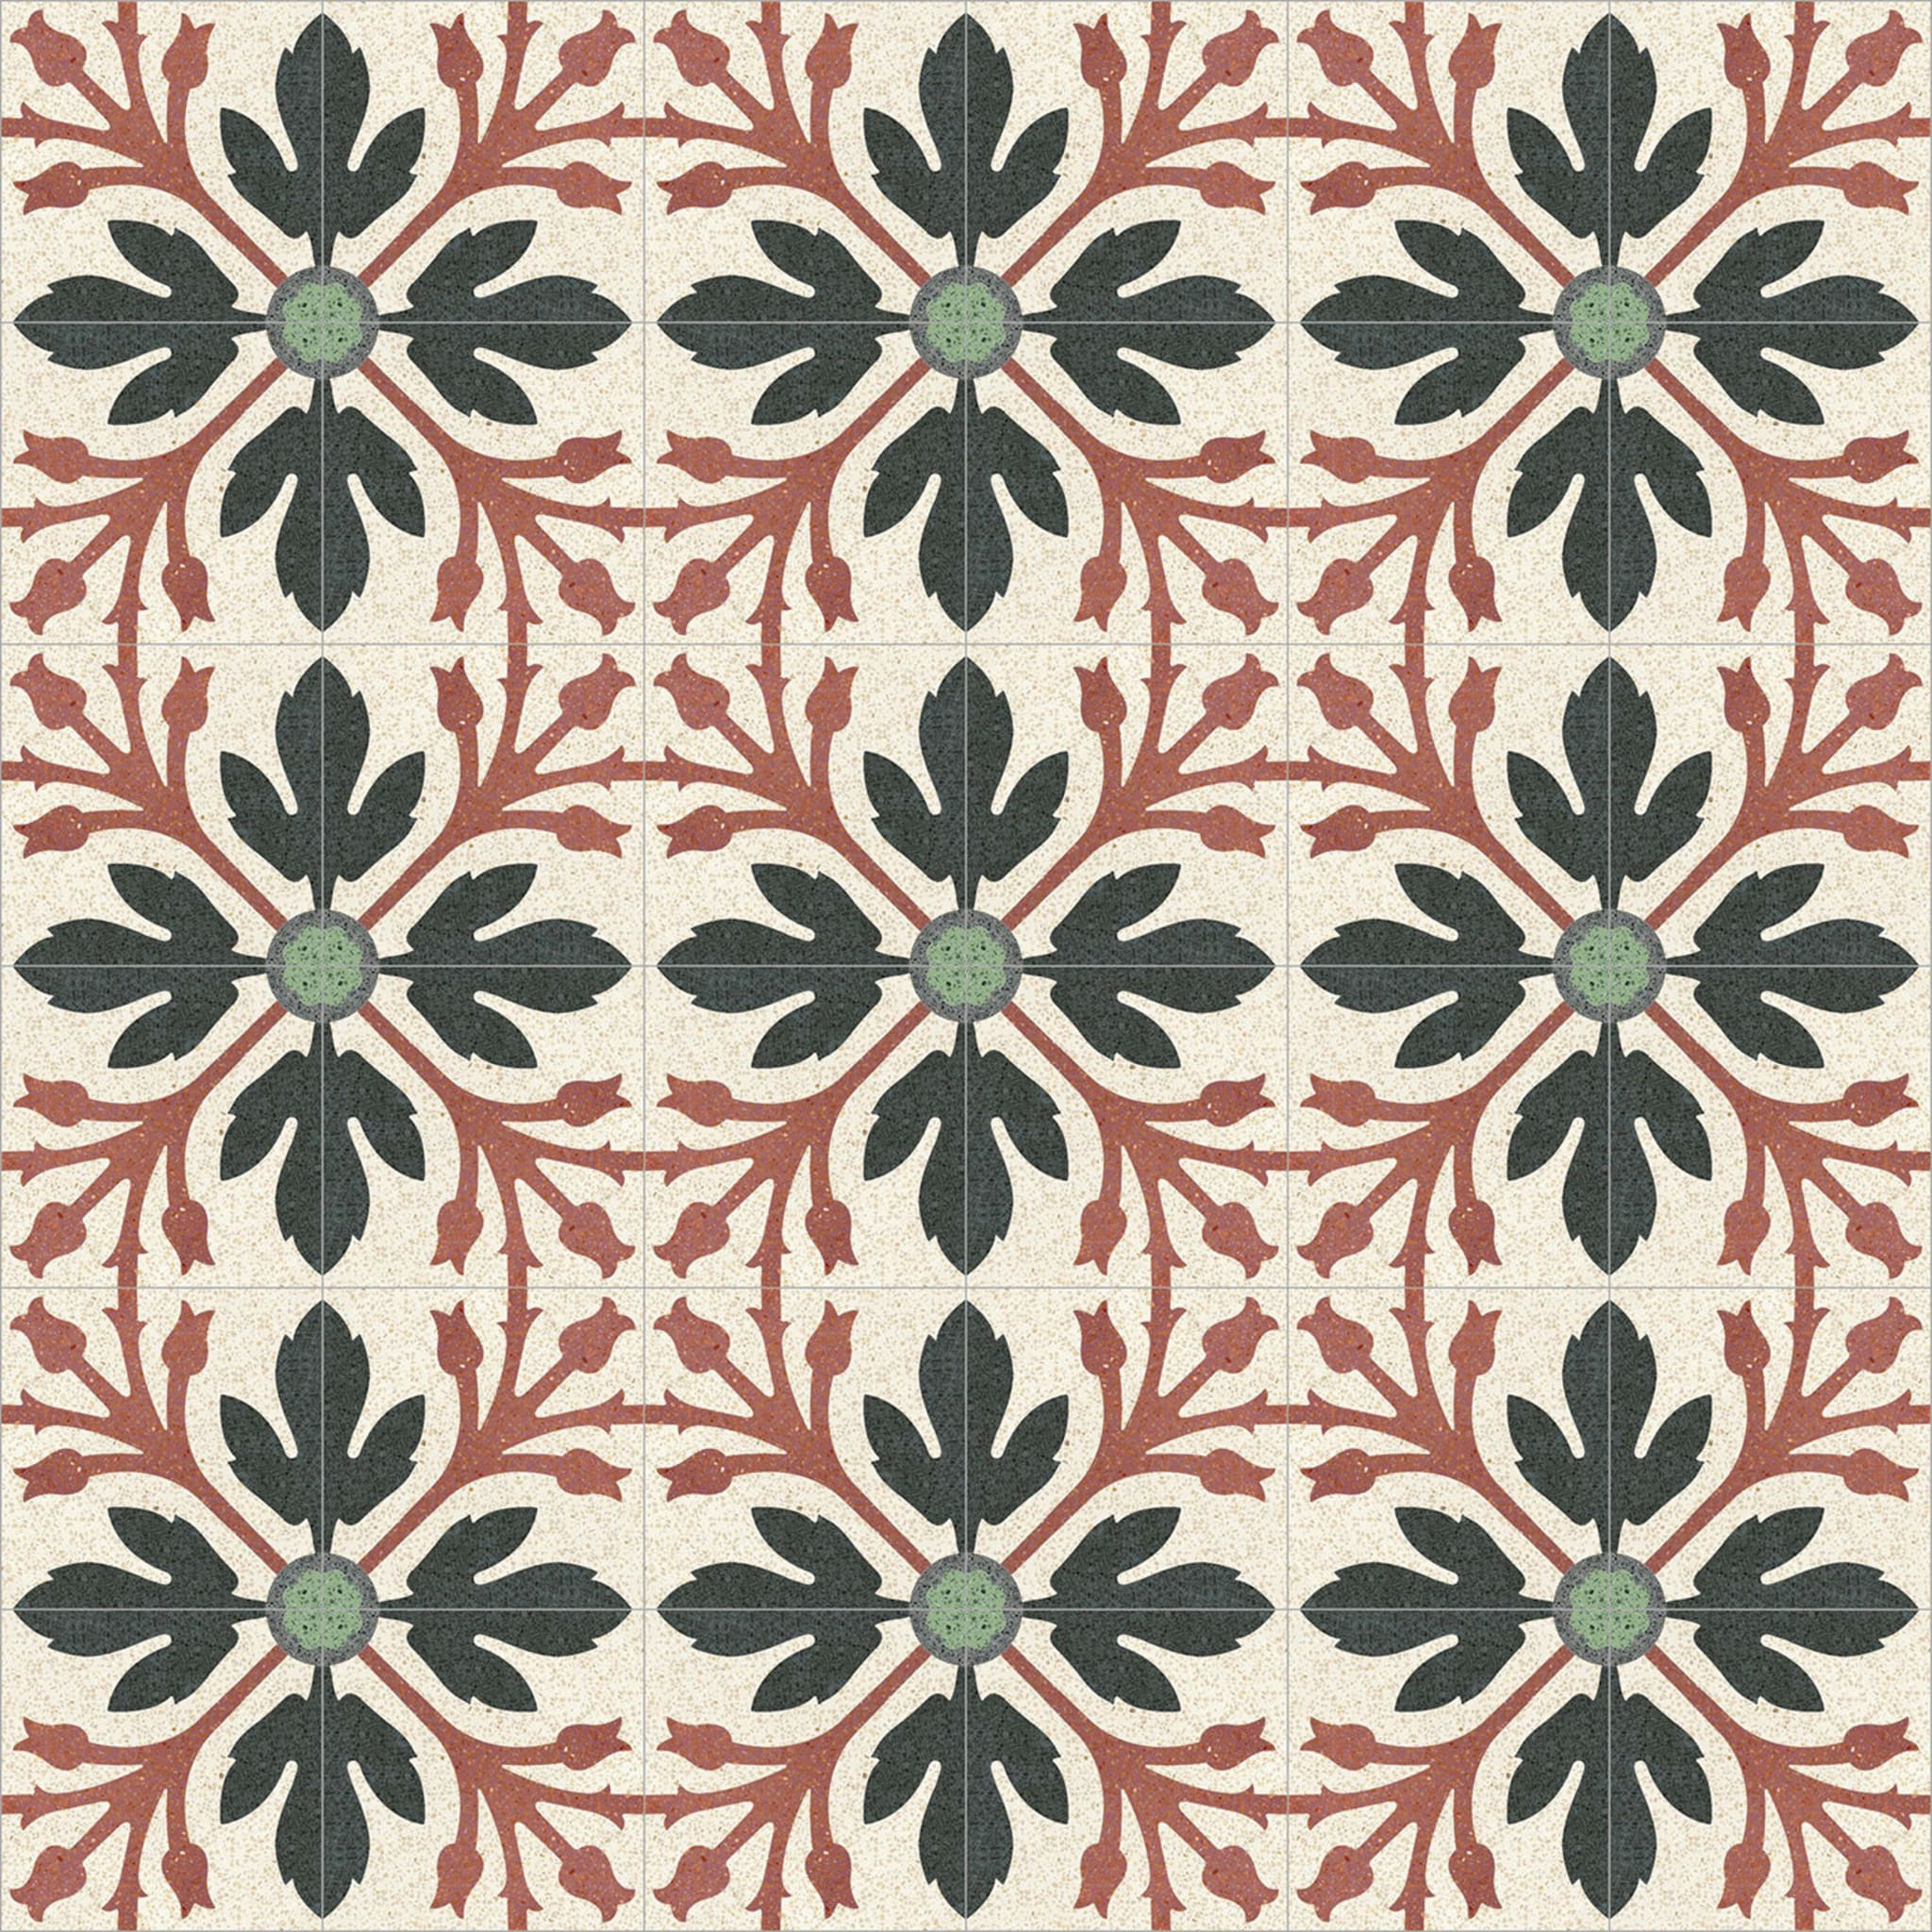 Flores Set of 25 Terrazzo Tiles - Alternative view 1